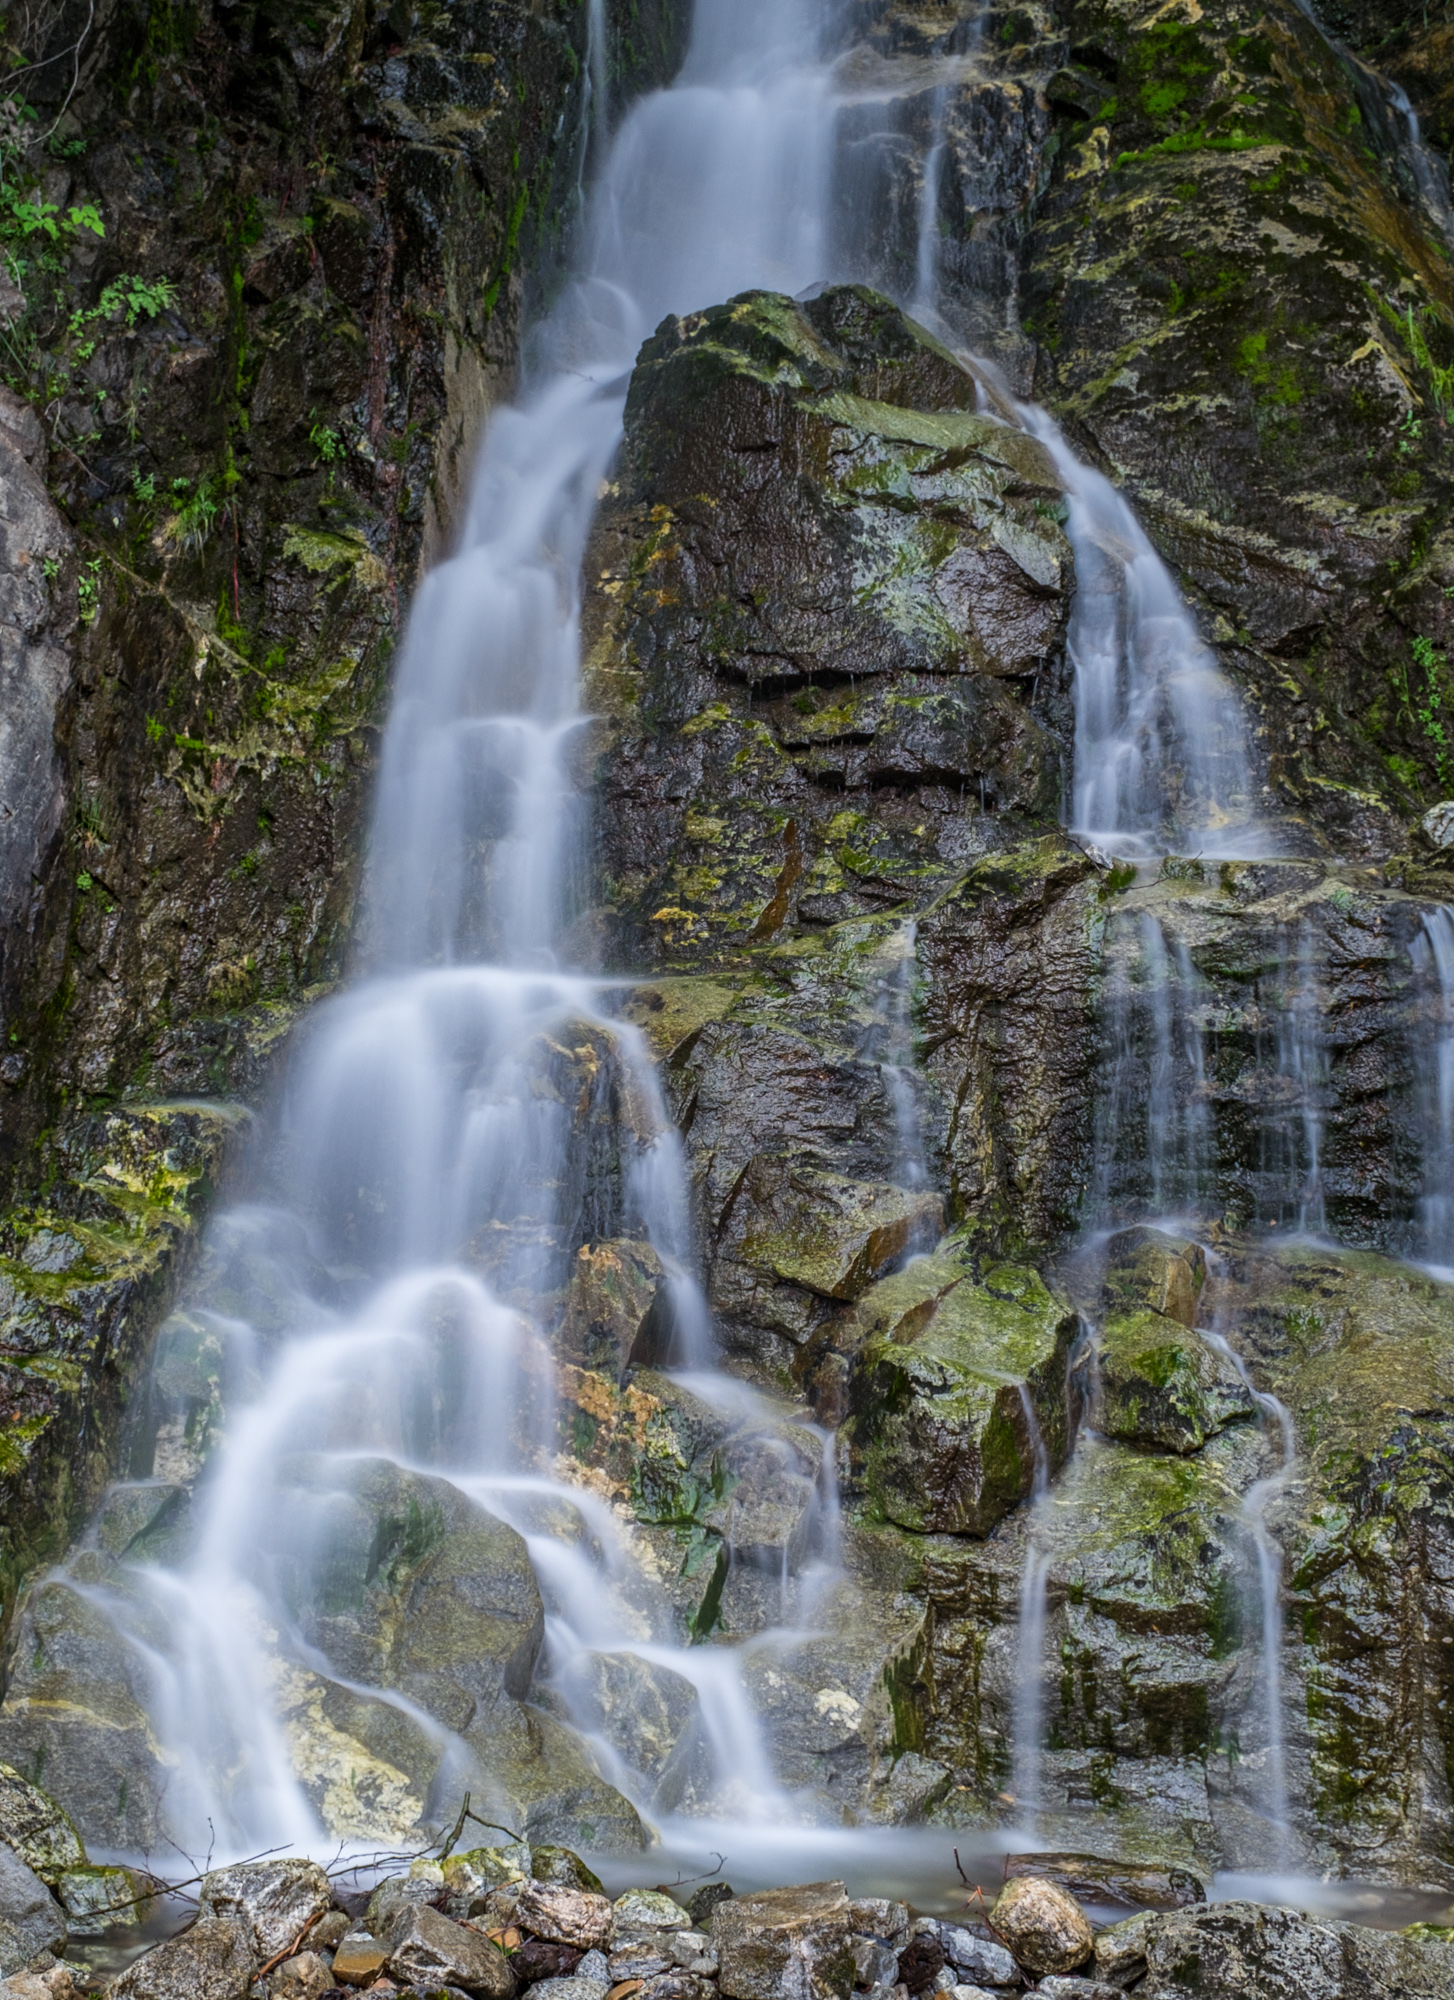 Cascad. Дилижанский водопад. Дилижанский национальный парк водопады. Зааминский национальный парк водопад. Национальный парк Балф водопад Cascode.